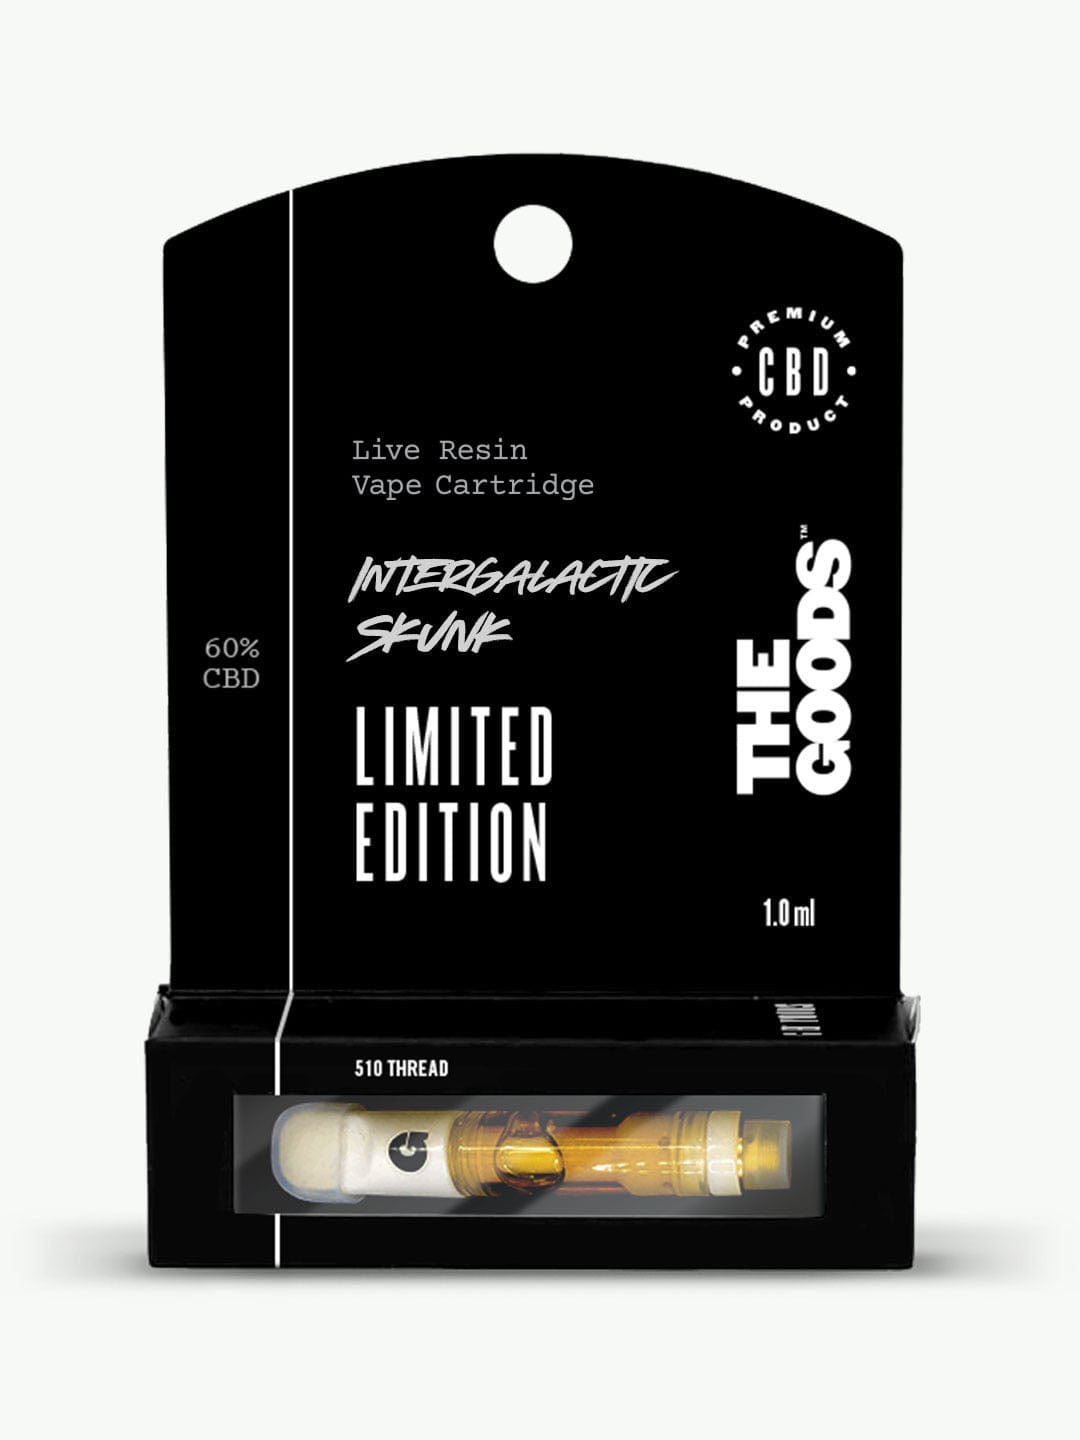 Intergalactic Skunk Live Resin 510 Cartridge 60% CBD 1.0ml